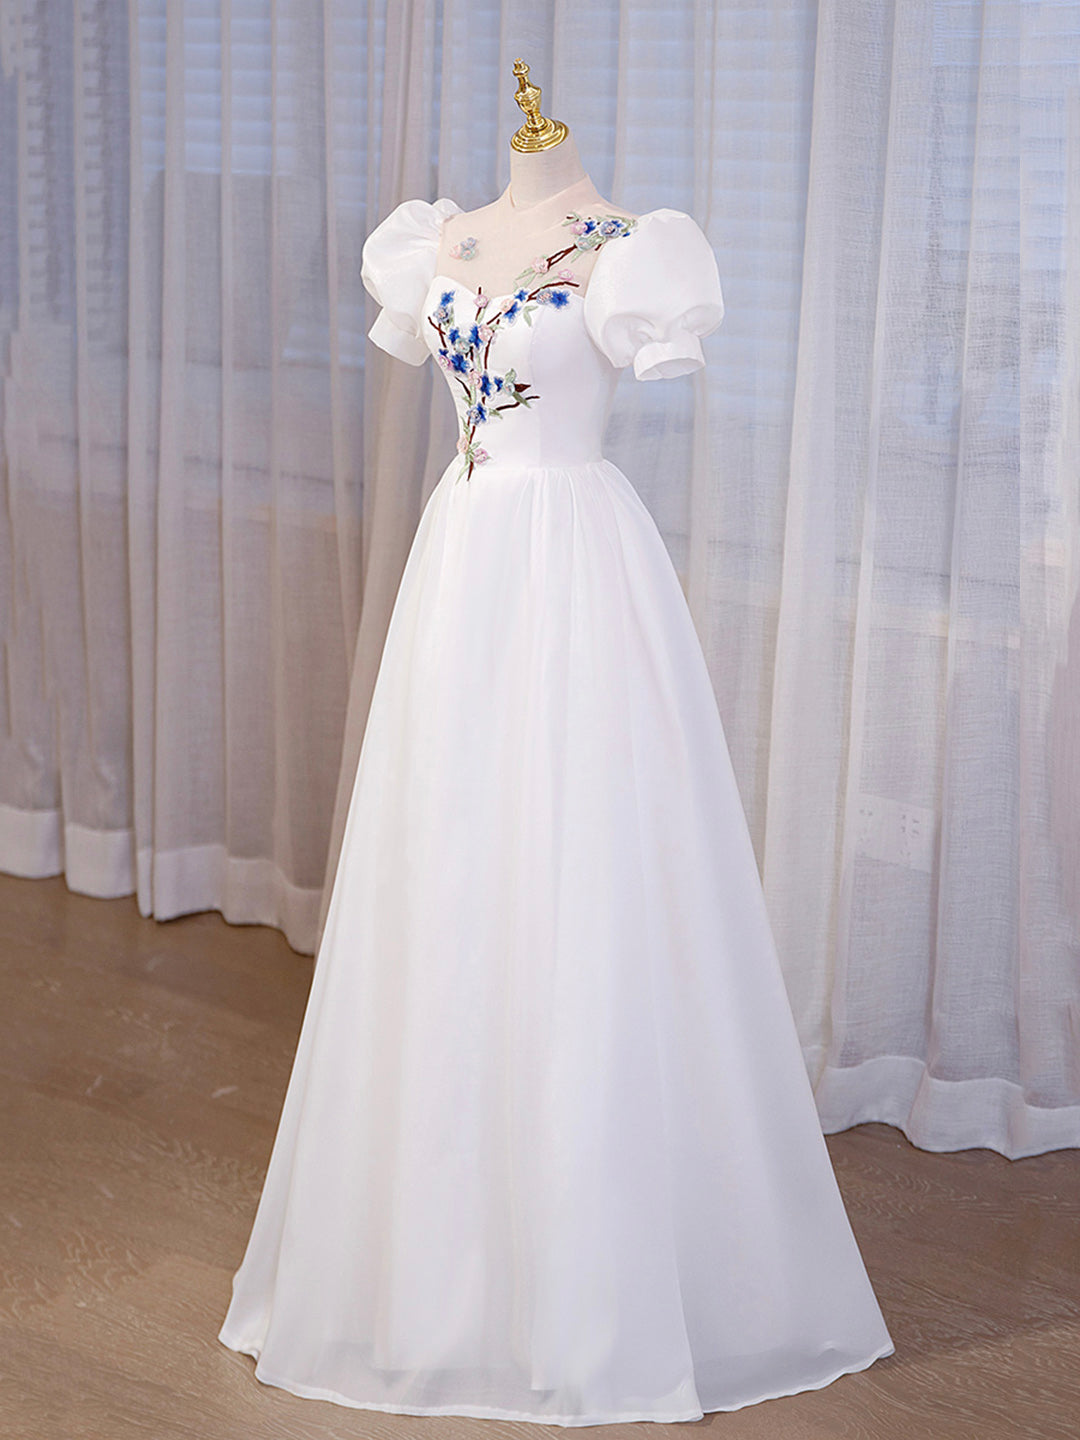 Elegant White Tulle Appliques Long Prom Dress, White High Neck A-Line Evening Dress